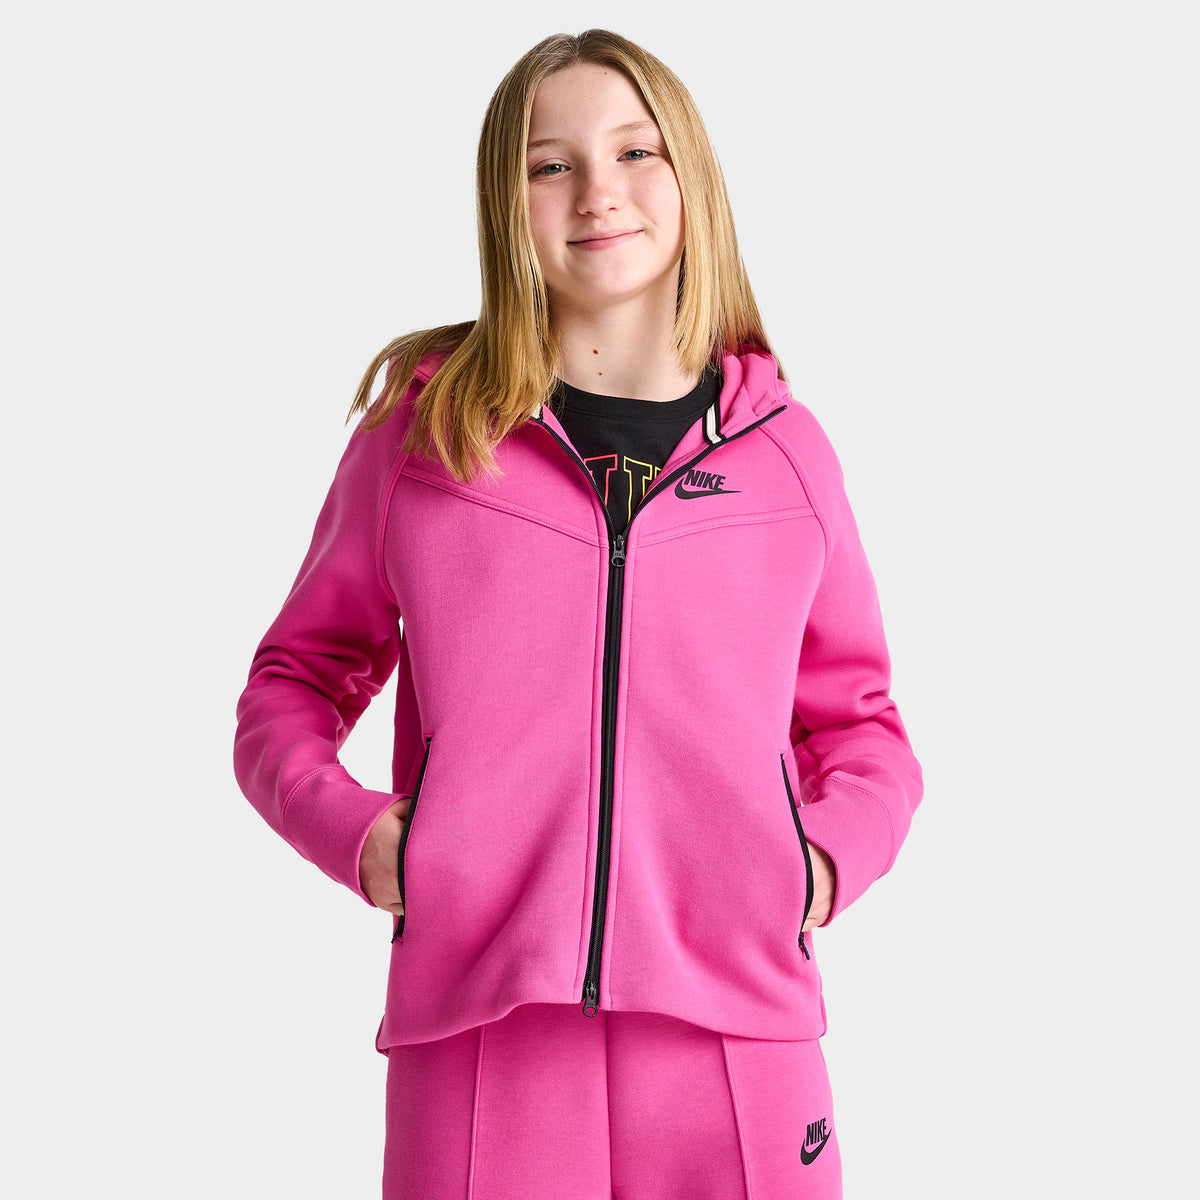 Womens Pink Tech Fleece Clothing.